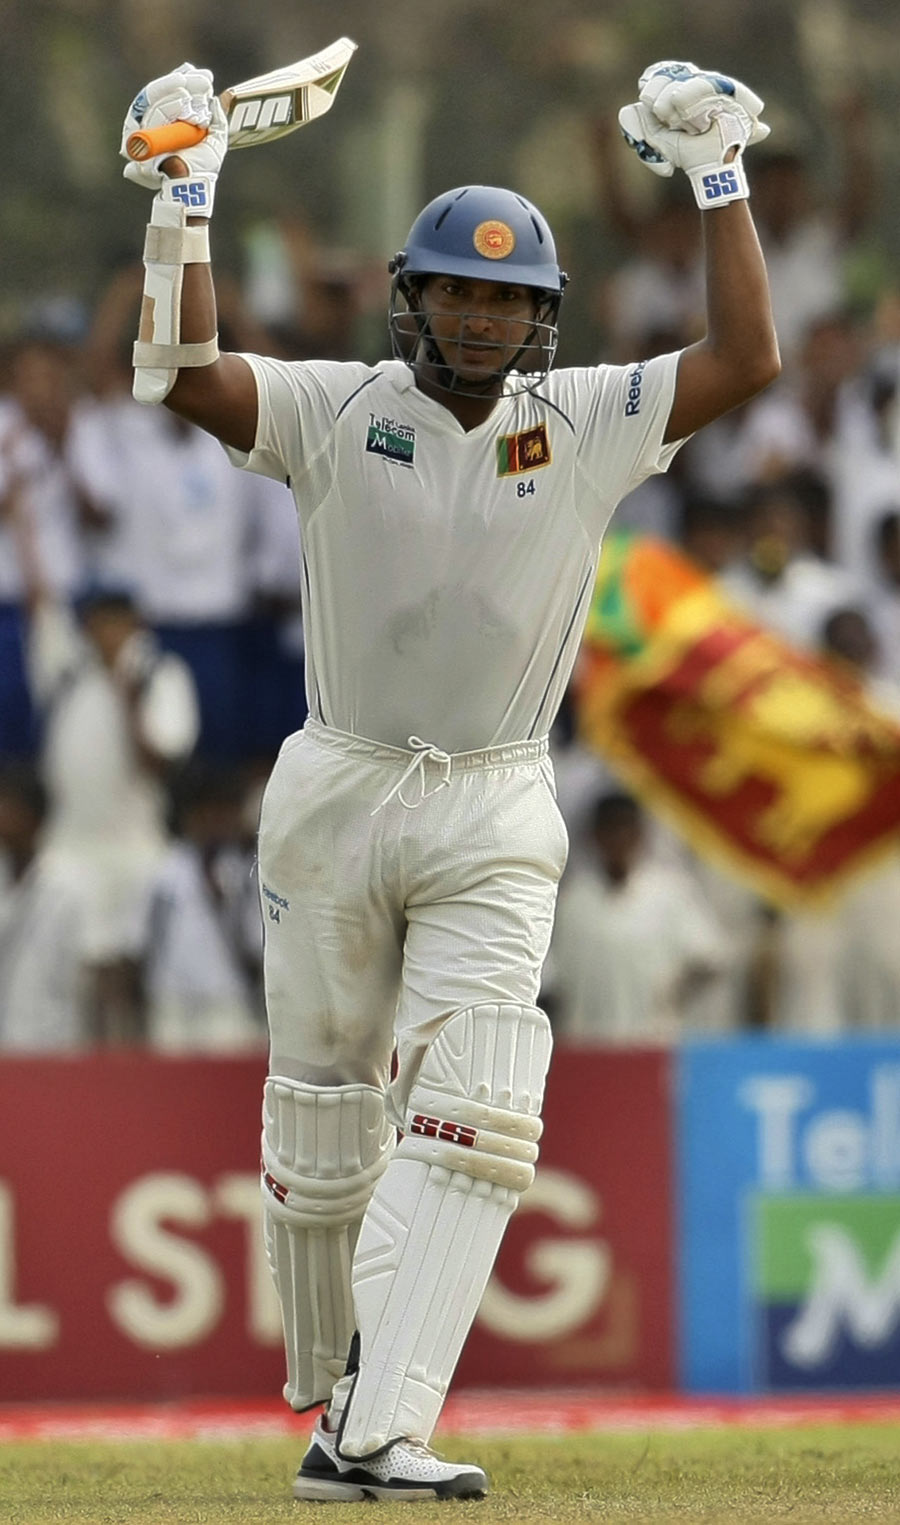 Kumar Sangakkara had little trouble reaching his 22nd Test century